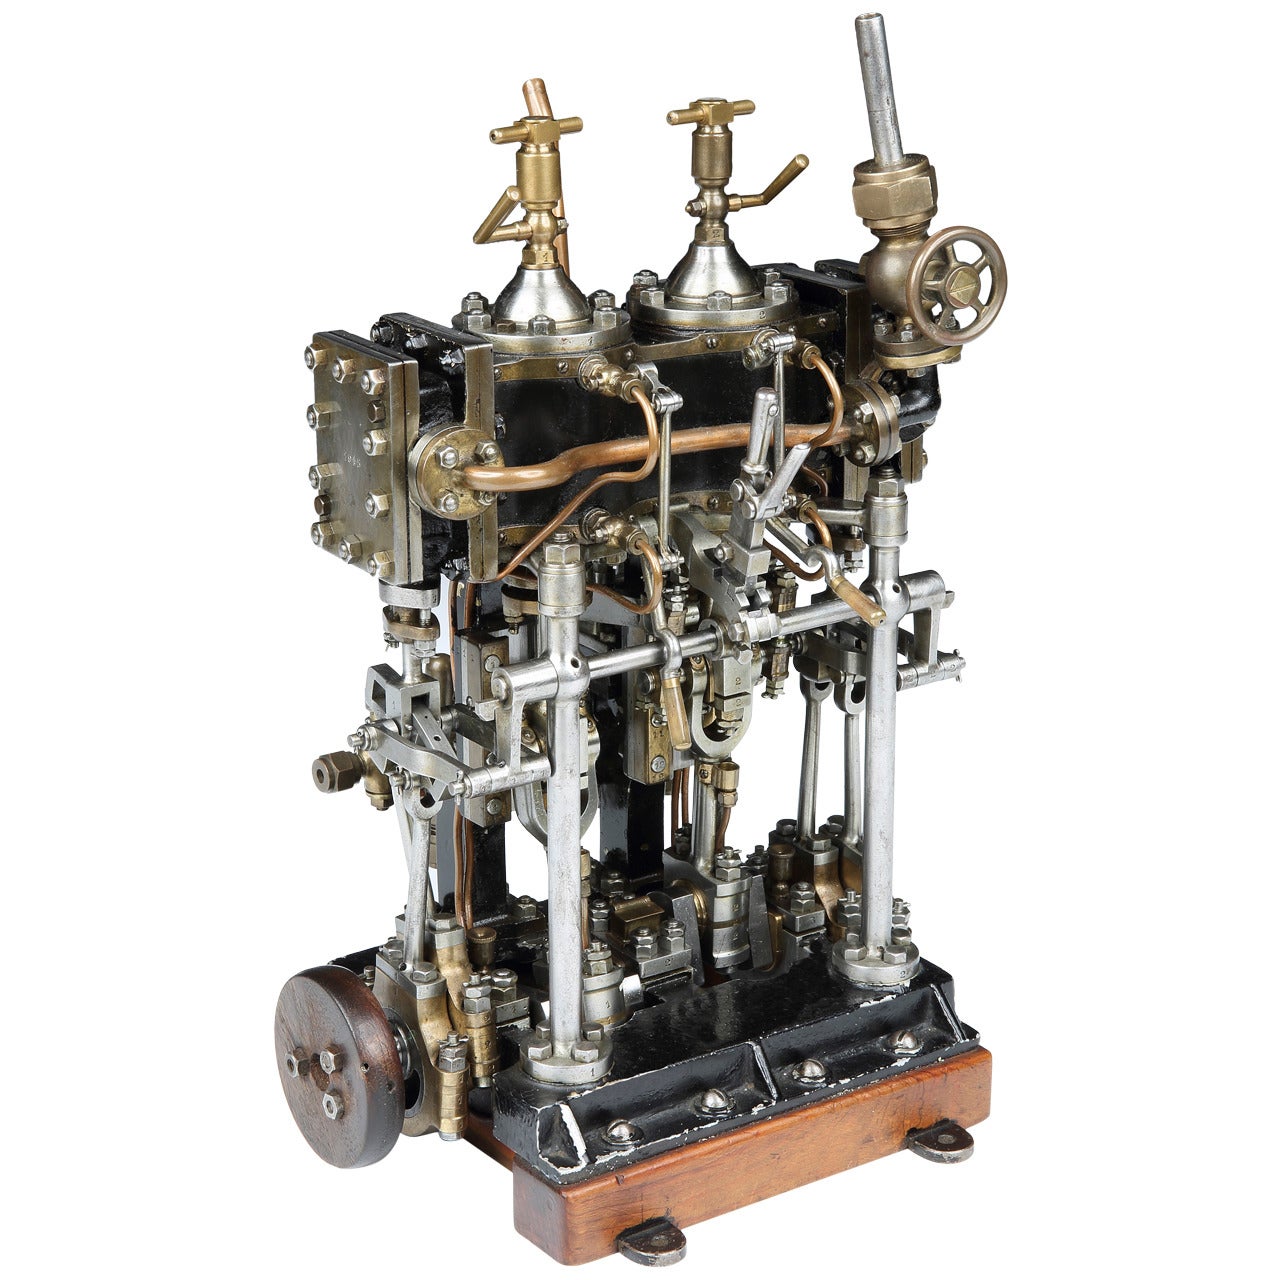 Working Scale Model of a Steam Engine by Sulzer Frères, Switzerland